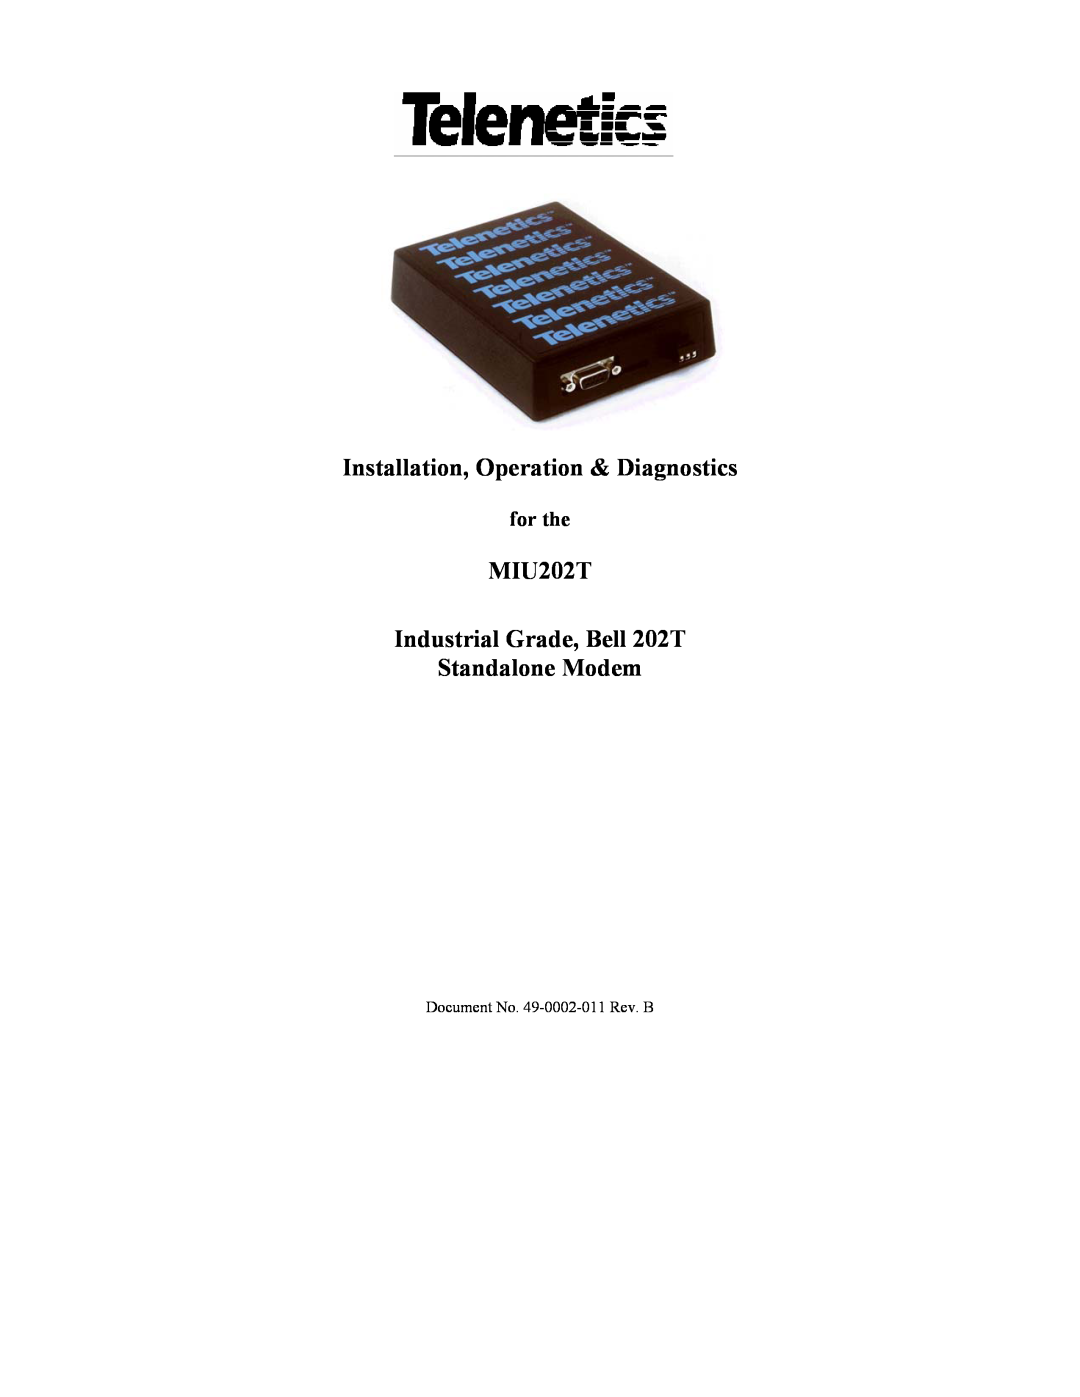 Telenetics MIU202T Modem manual for the, Installation, Operation & Diagnostics 